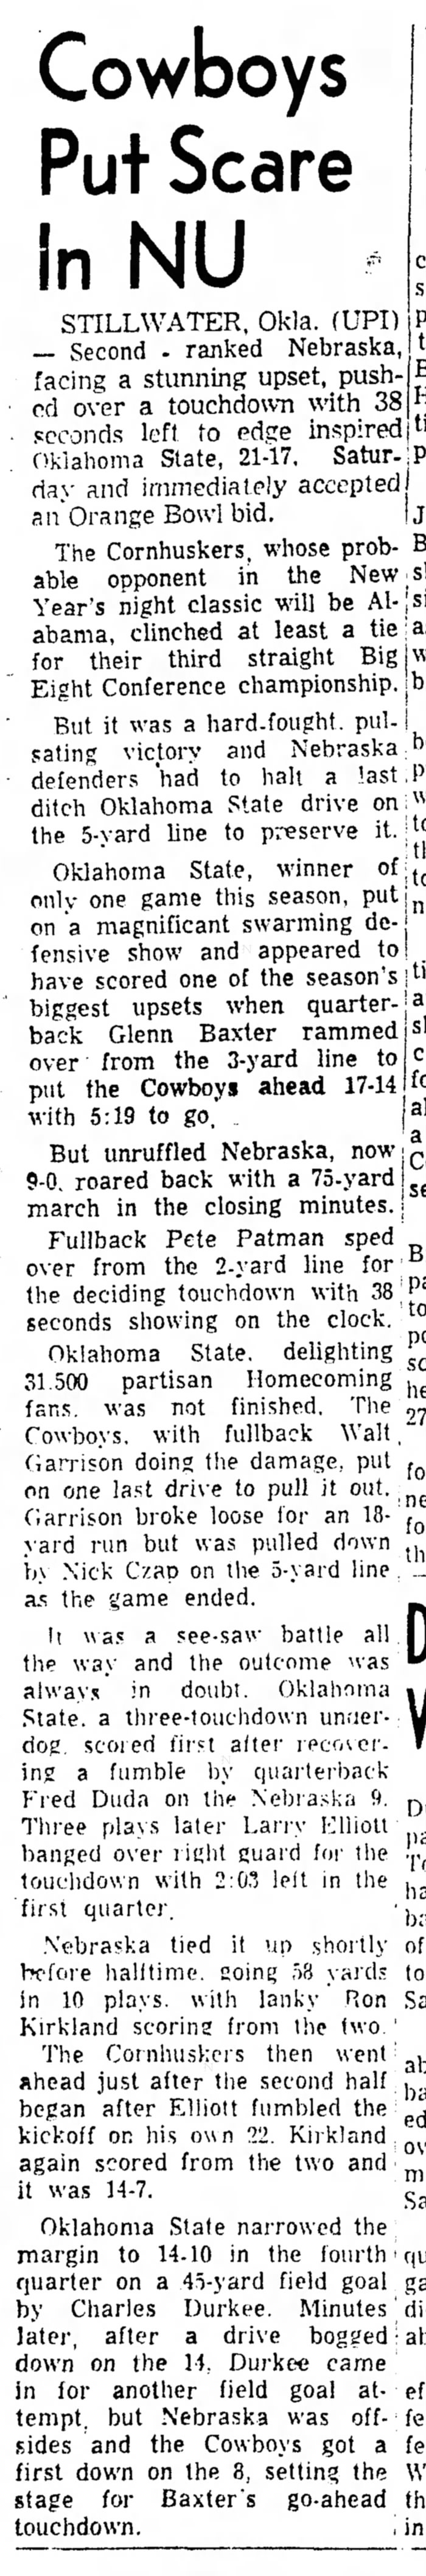 1965 Nebraska-Oklahoma State, UPI